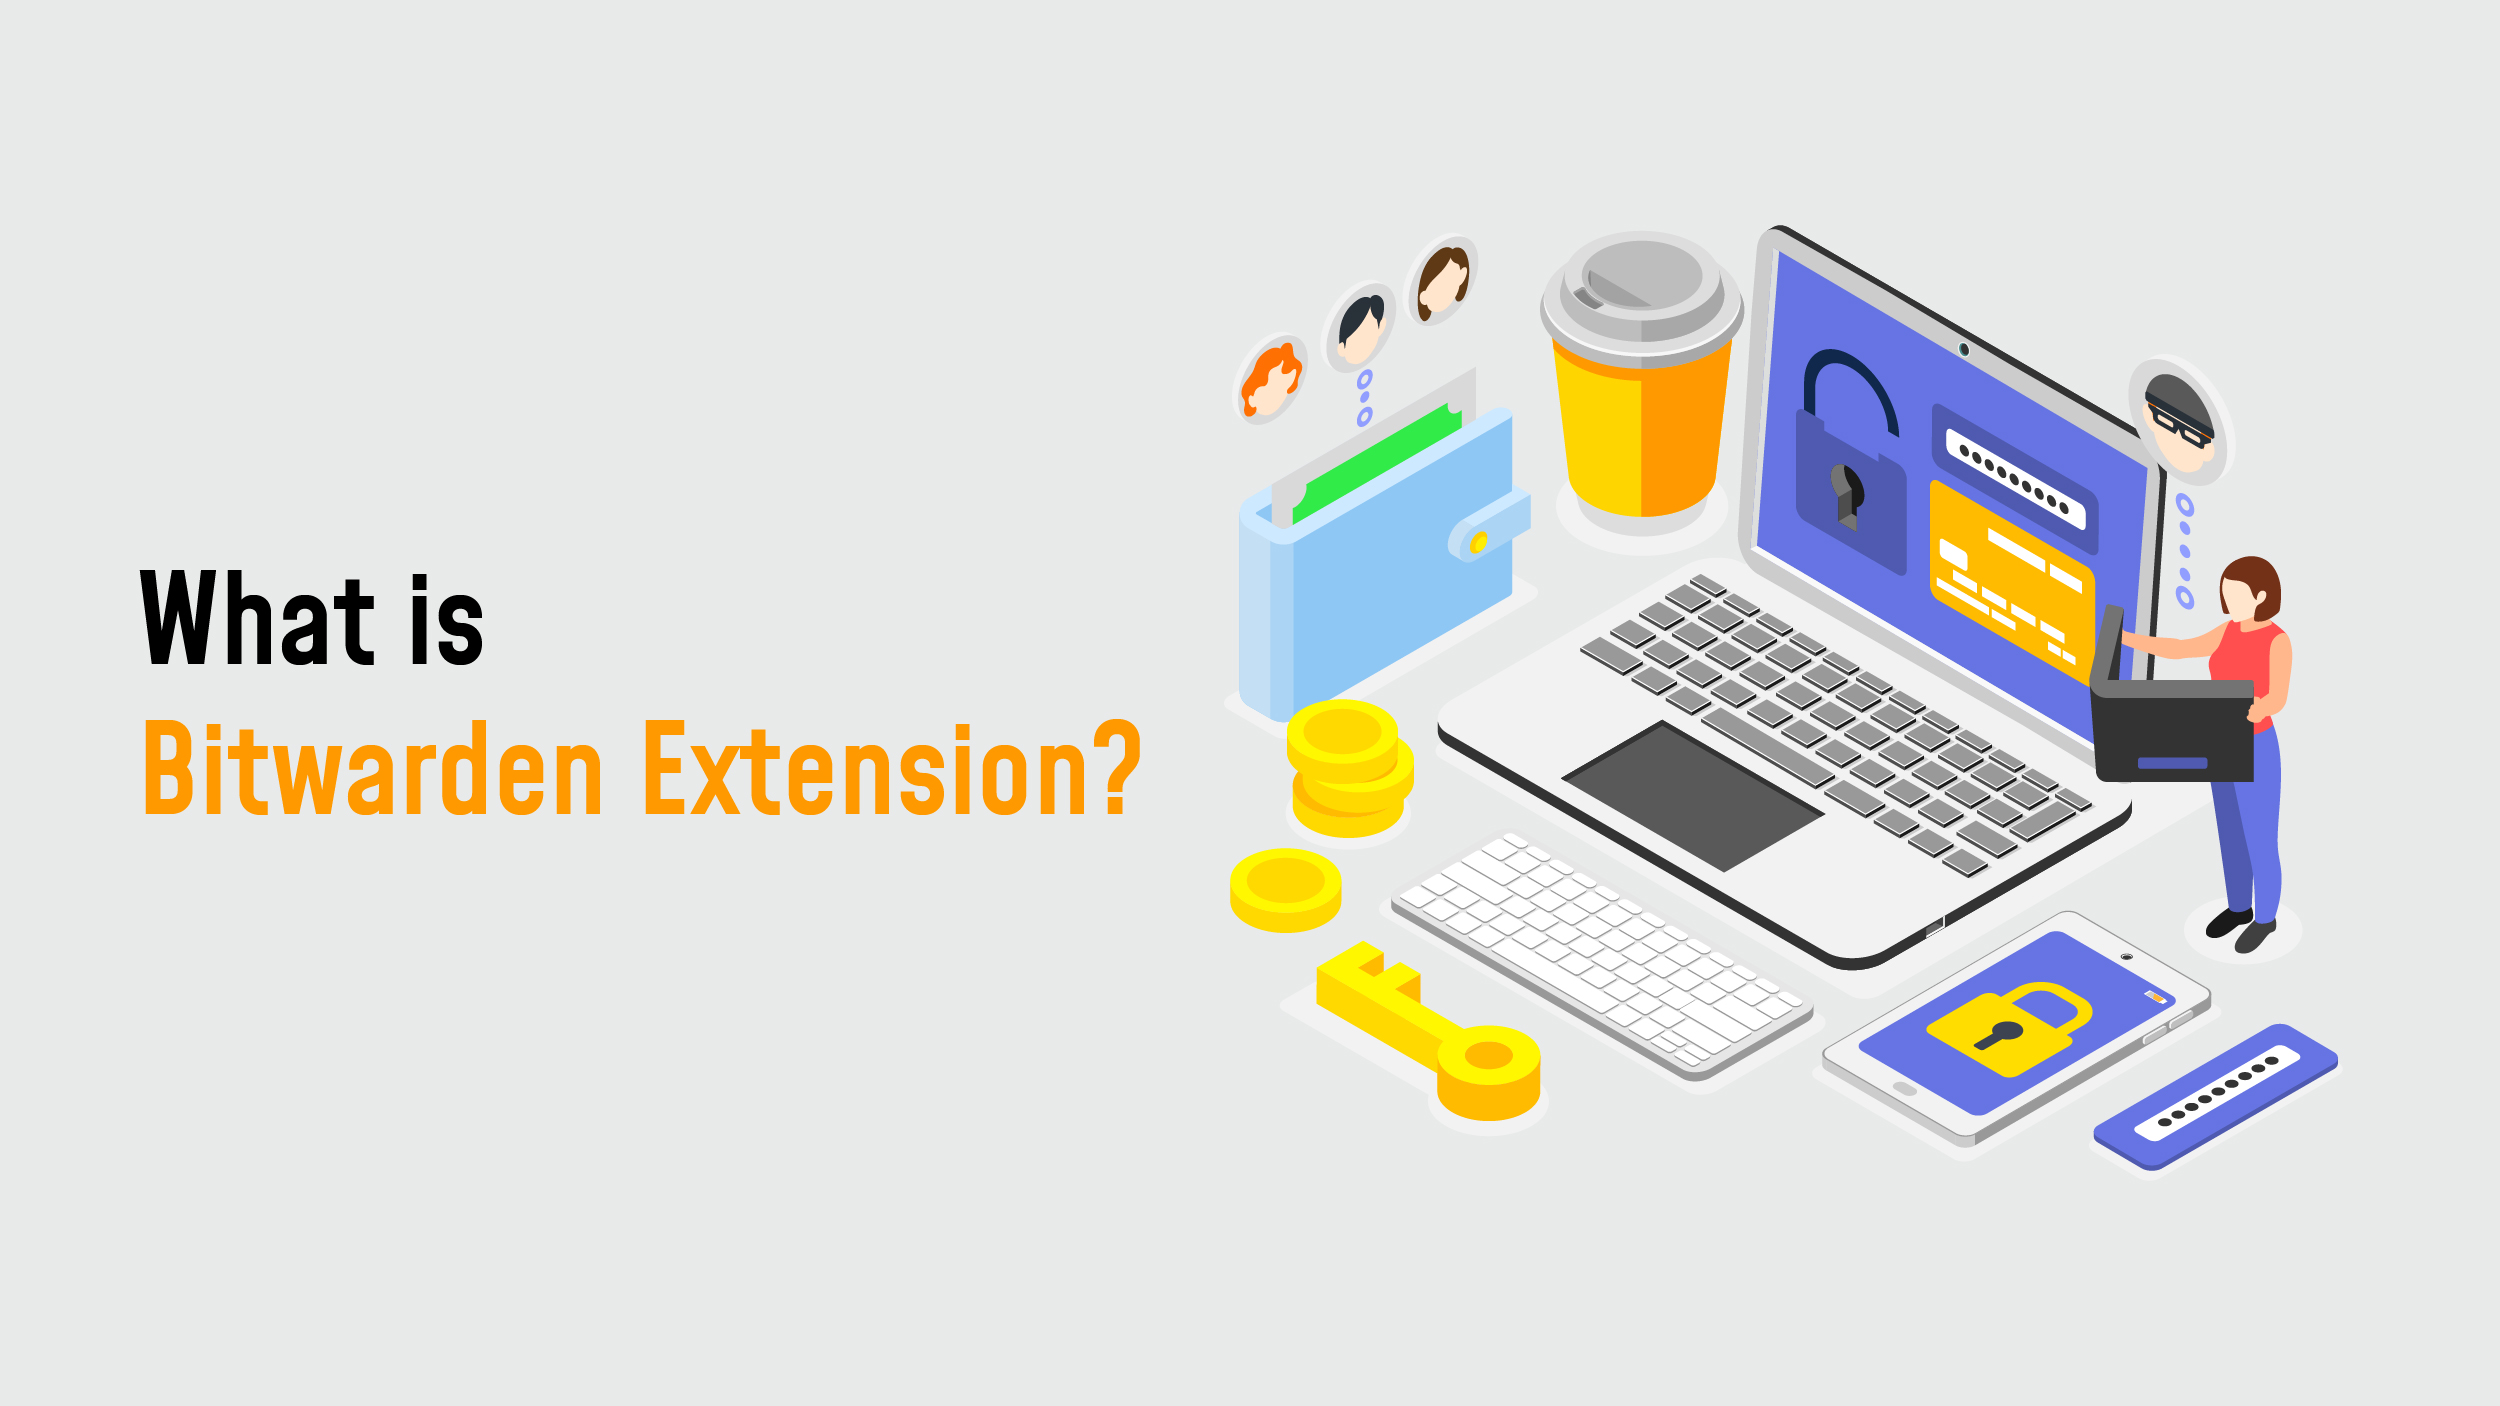 What is Bitwarden Extension?